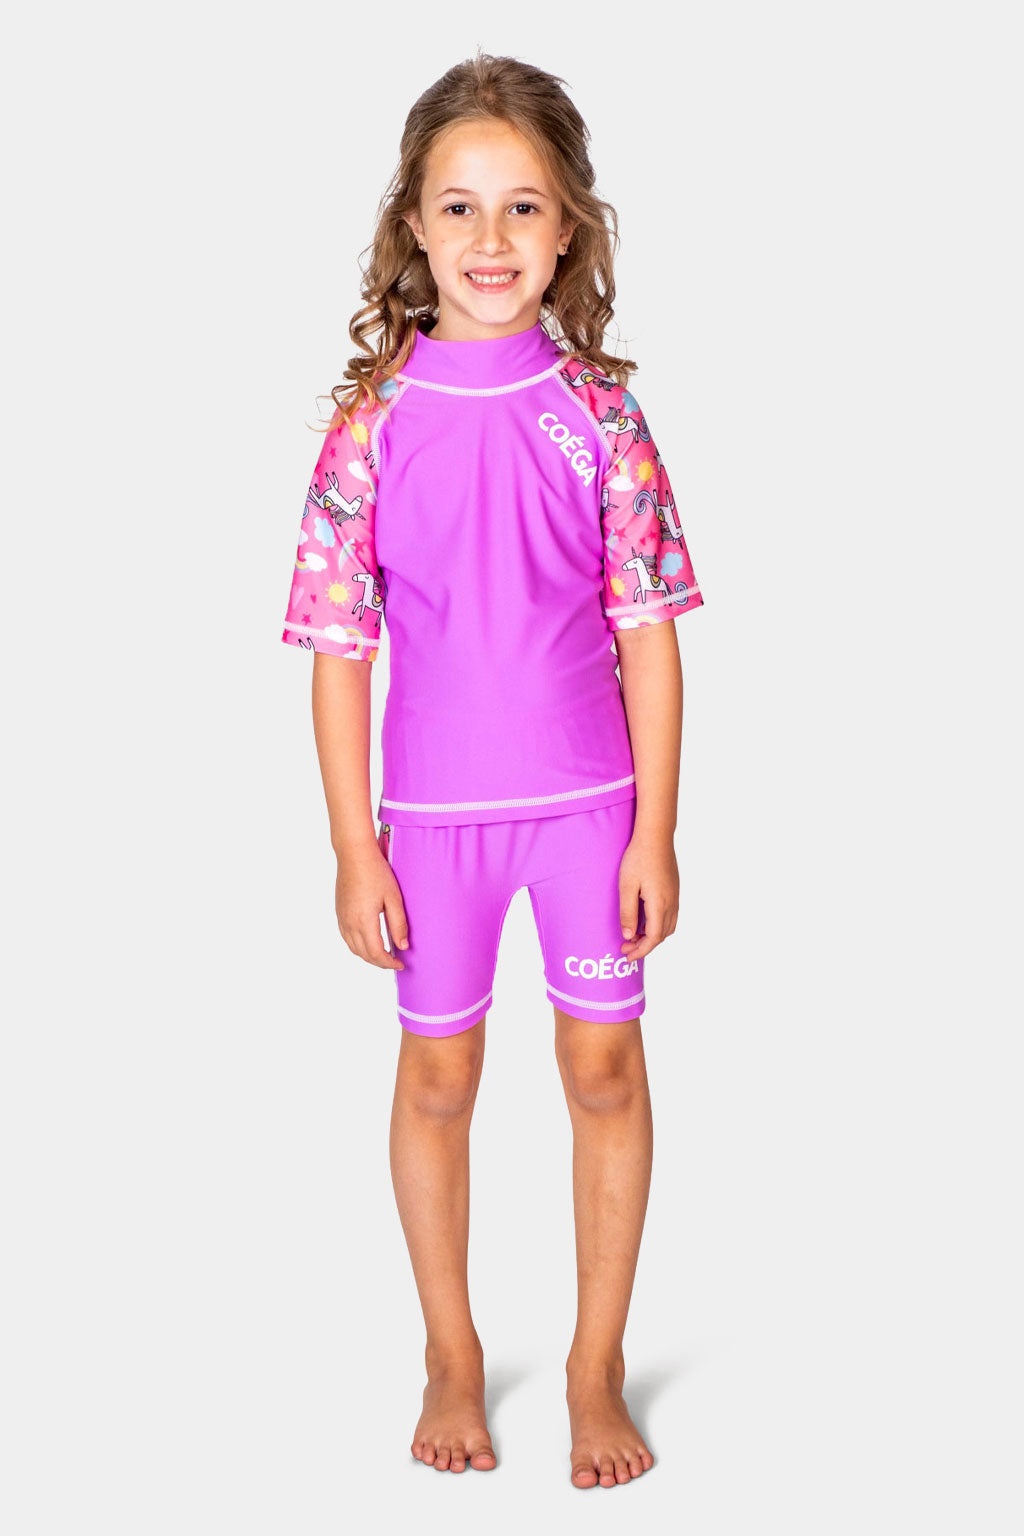 Coega - Girls Kids Swim Suit Two Piece